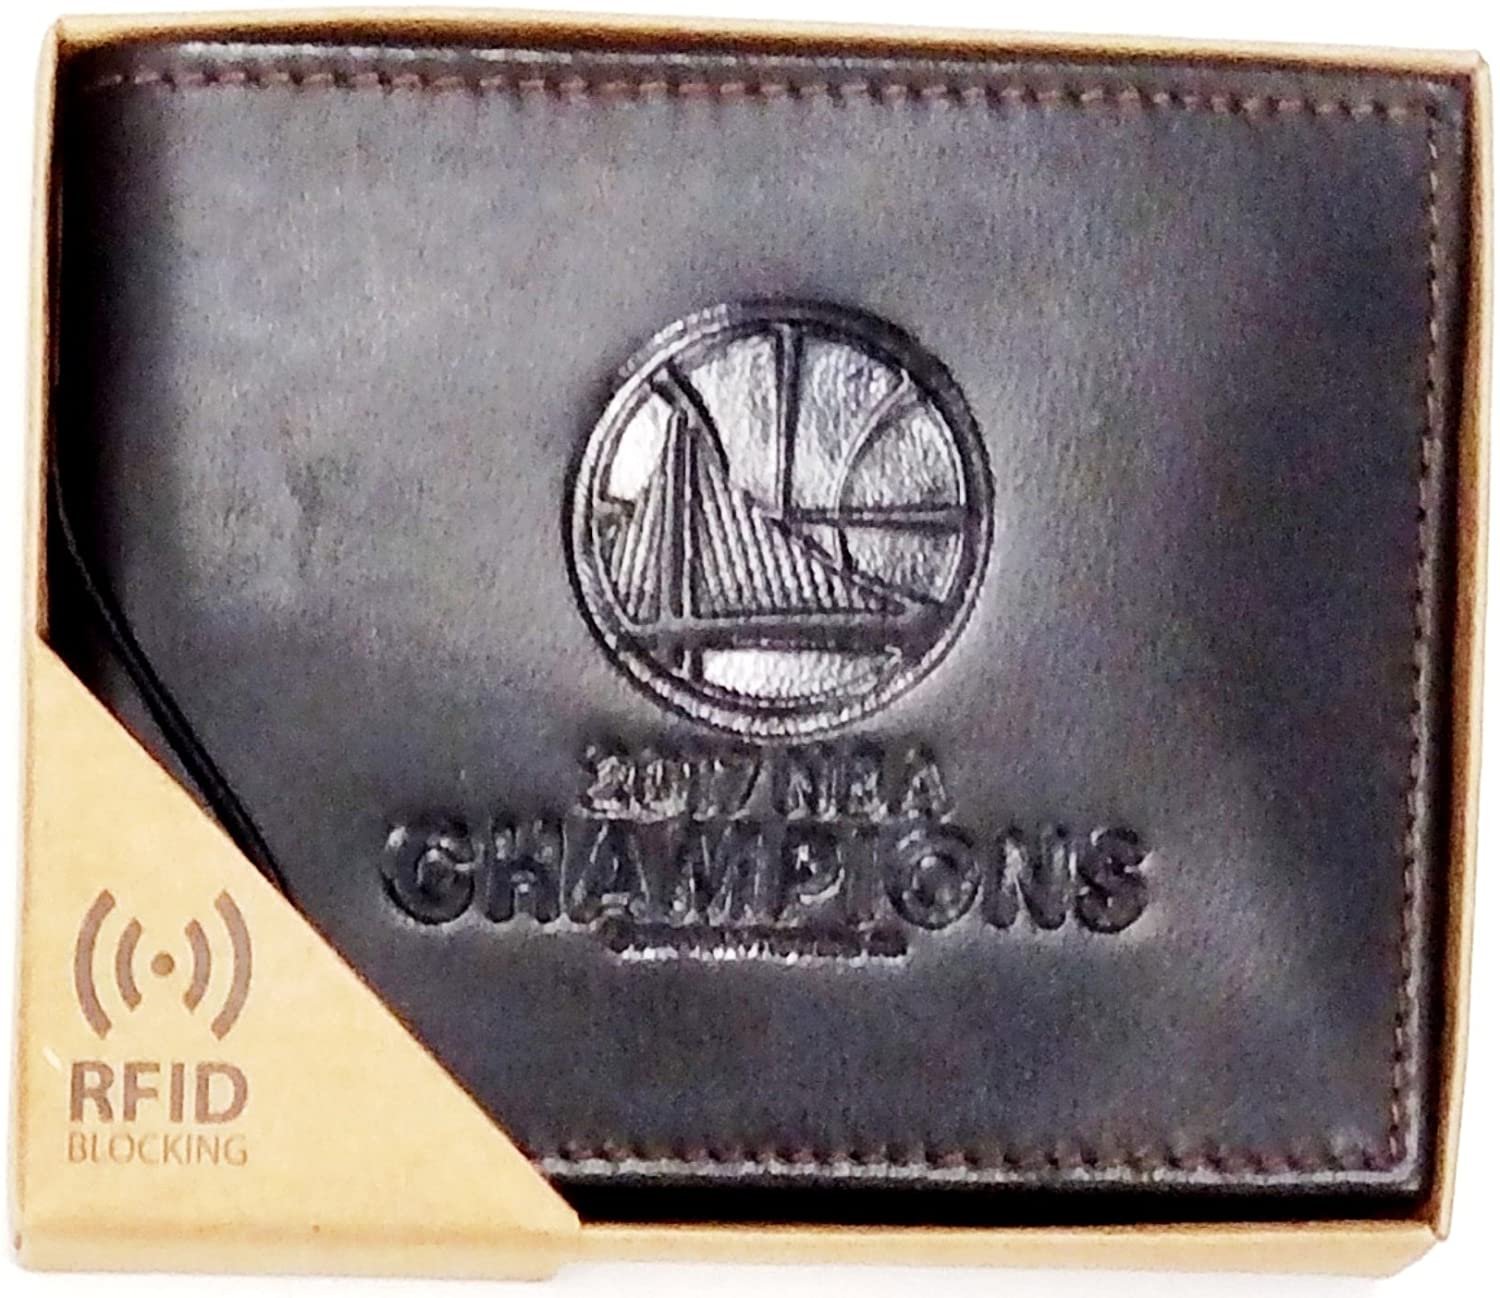 Golden State Warriors 2017 Champions Wallet Premium RFID Shield Blocking Dark Brown Leather Trifold Embossed Basketball